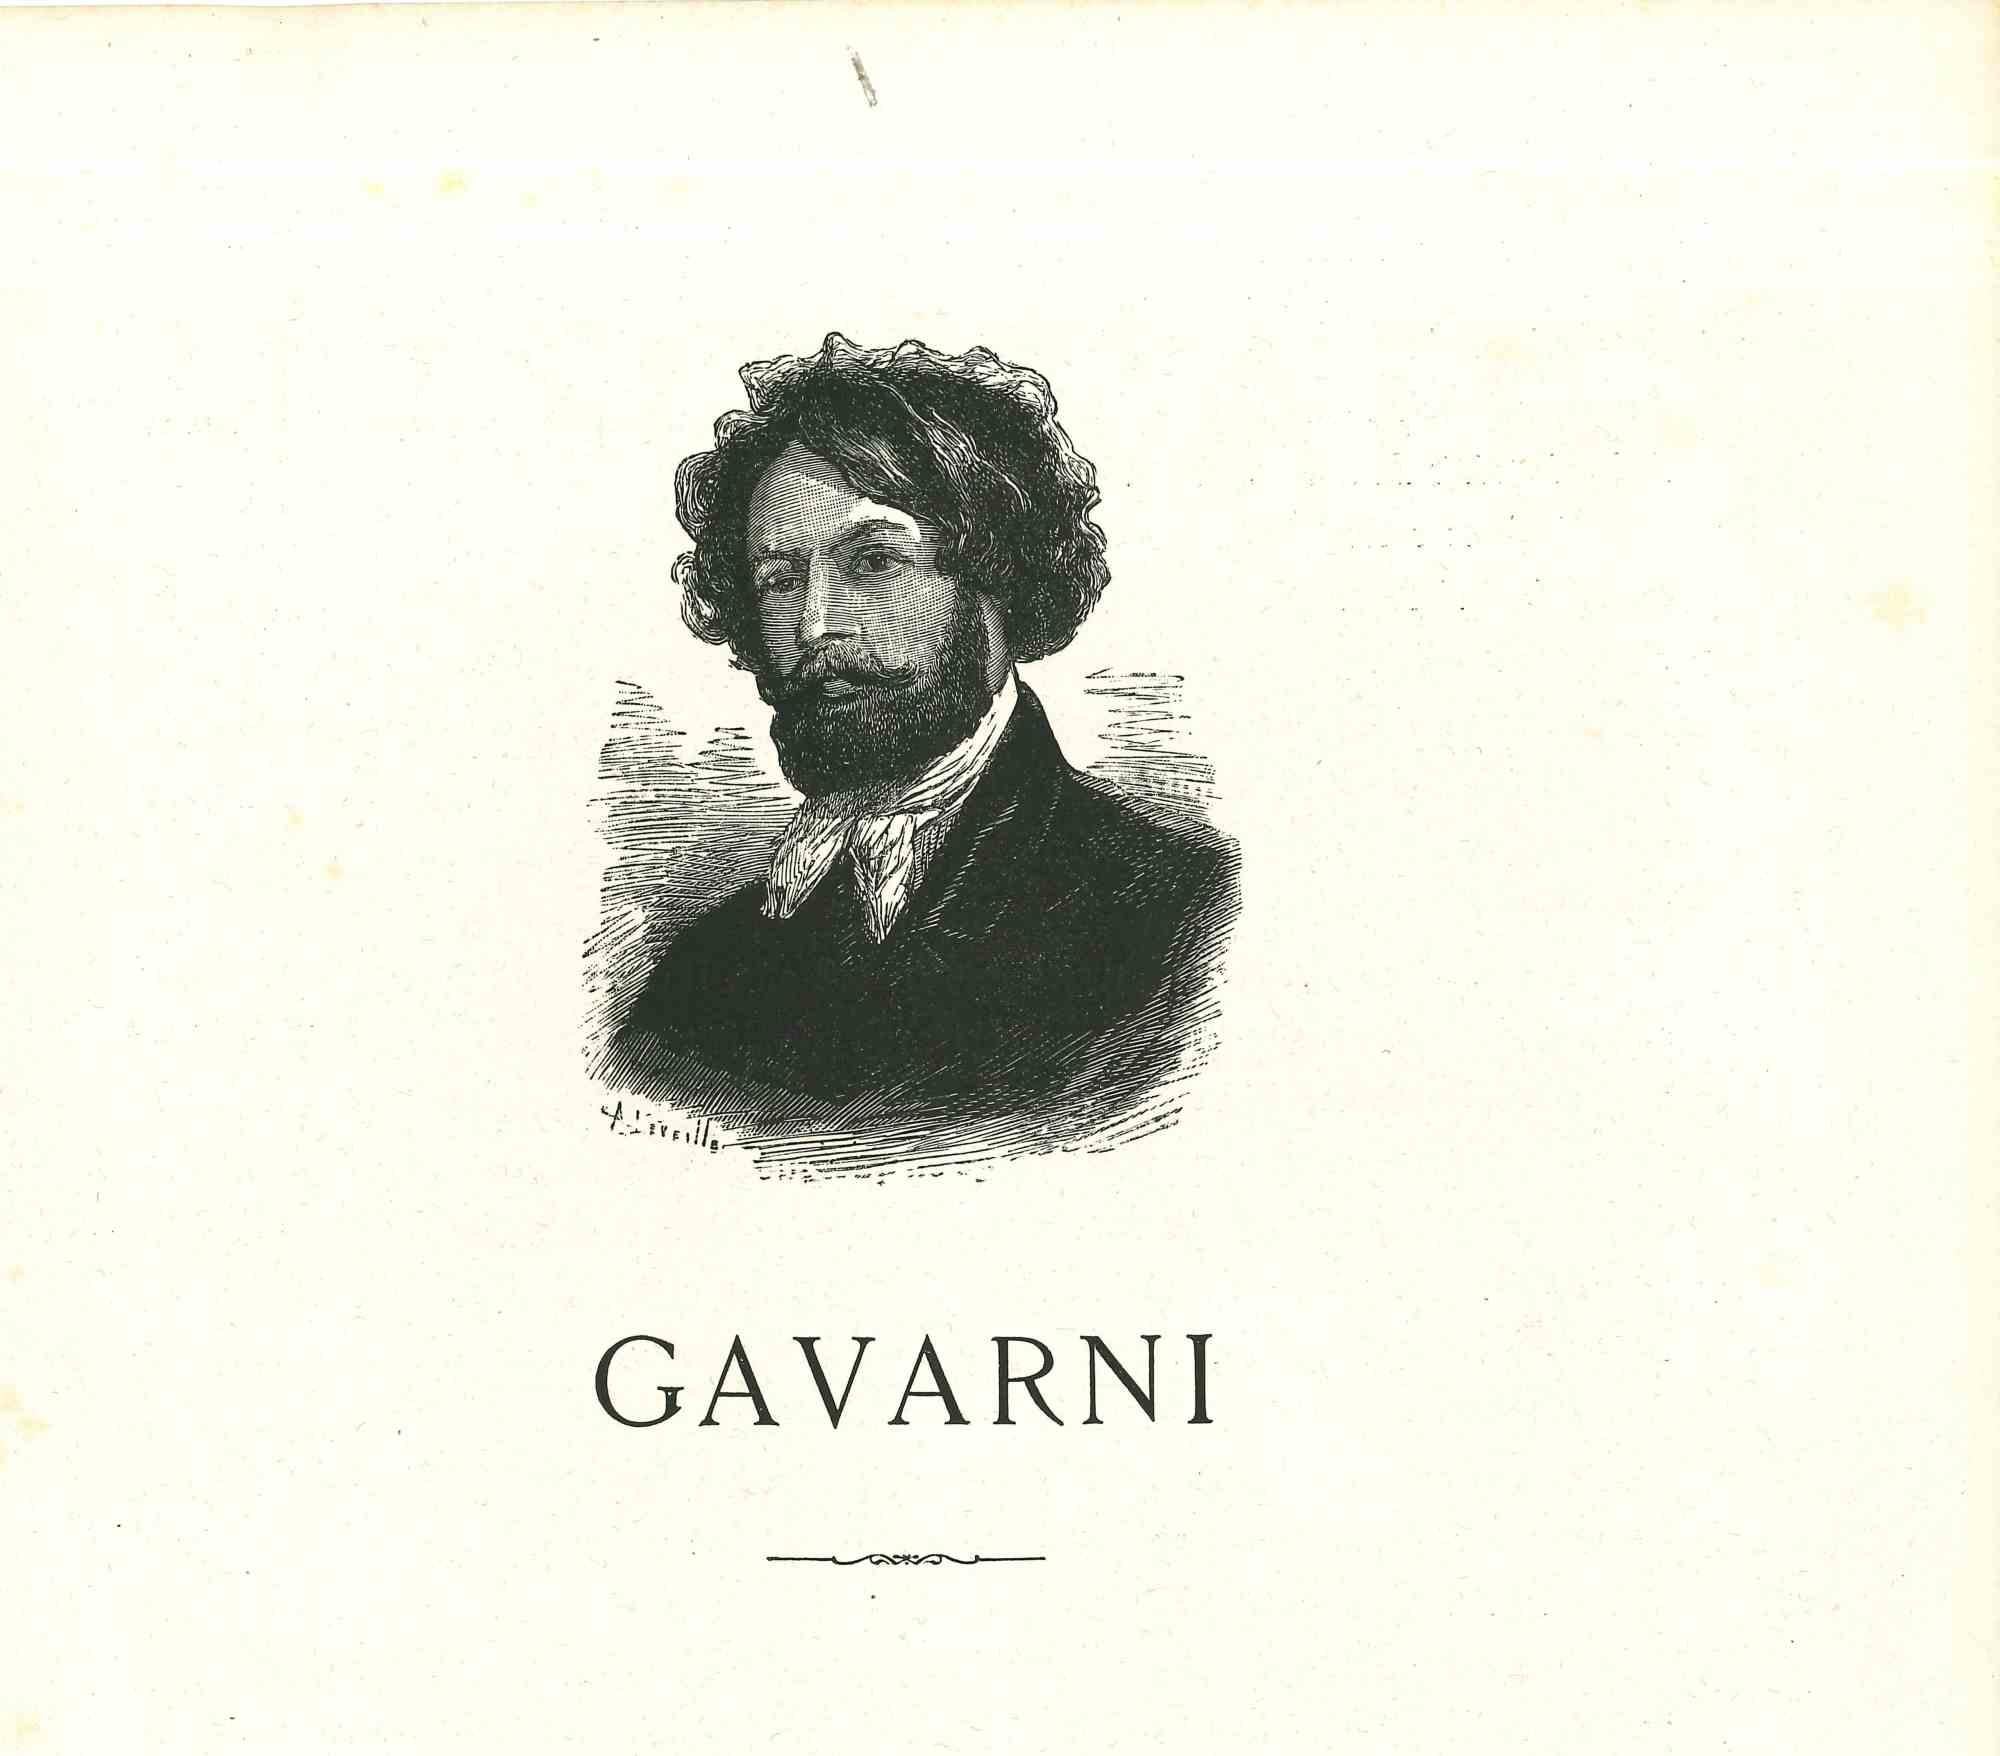 Self-portrait of Gavarni - Original Lithograph after Paul Gavarni - 1881